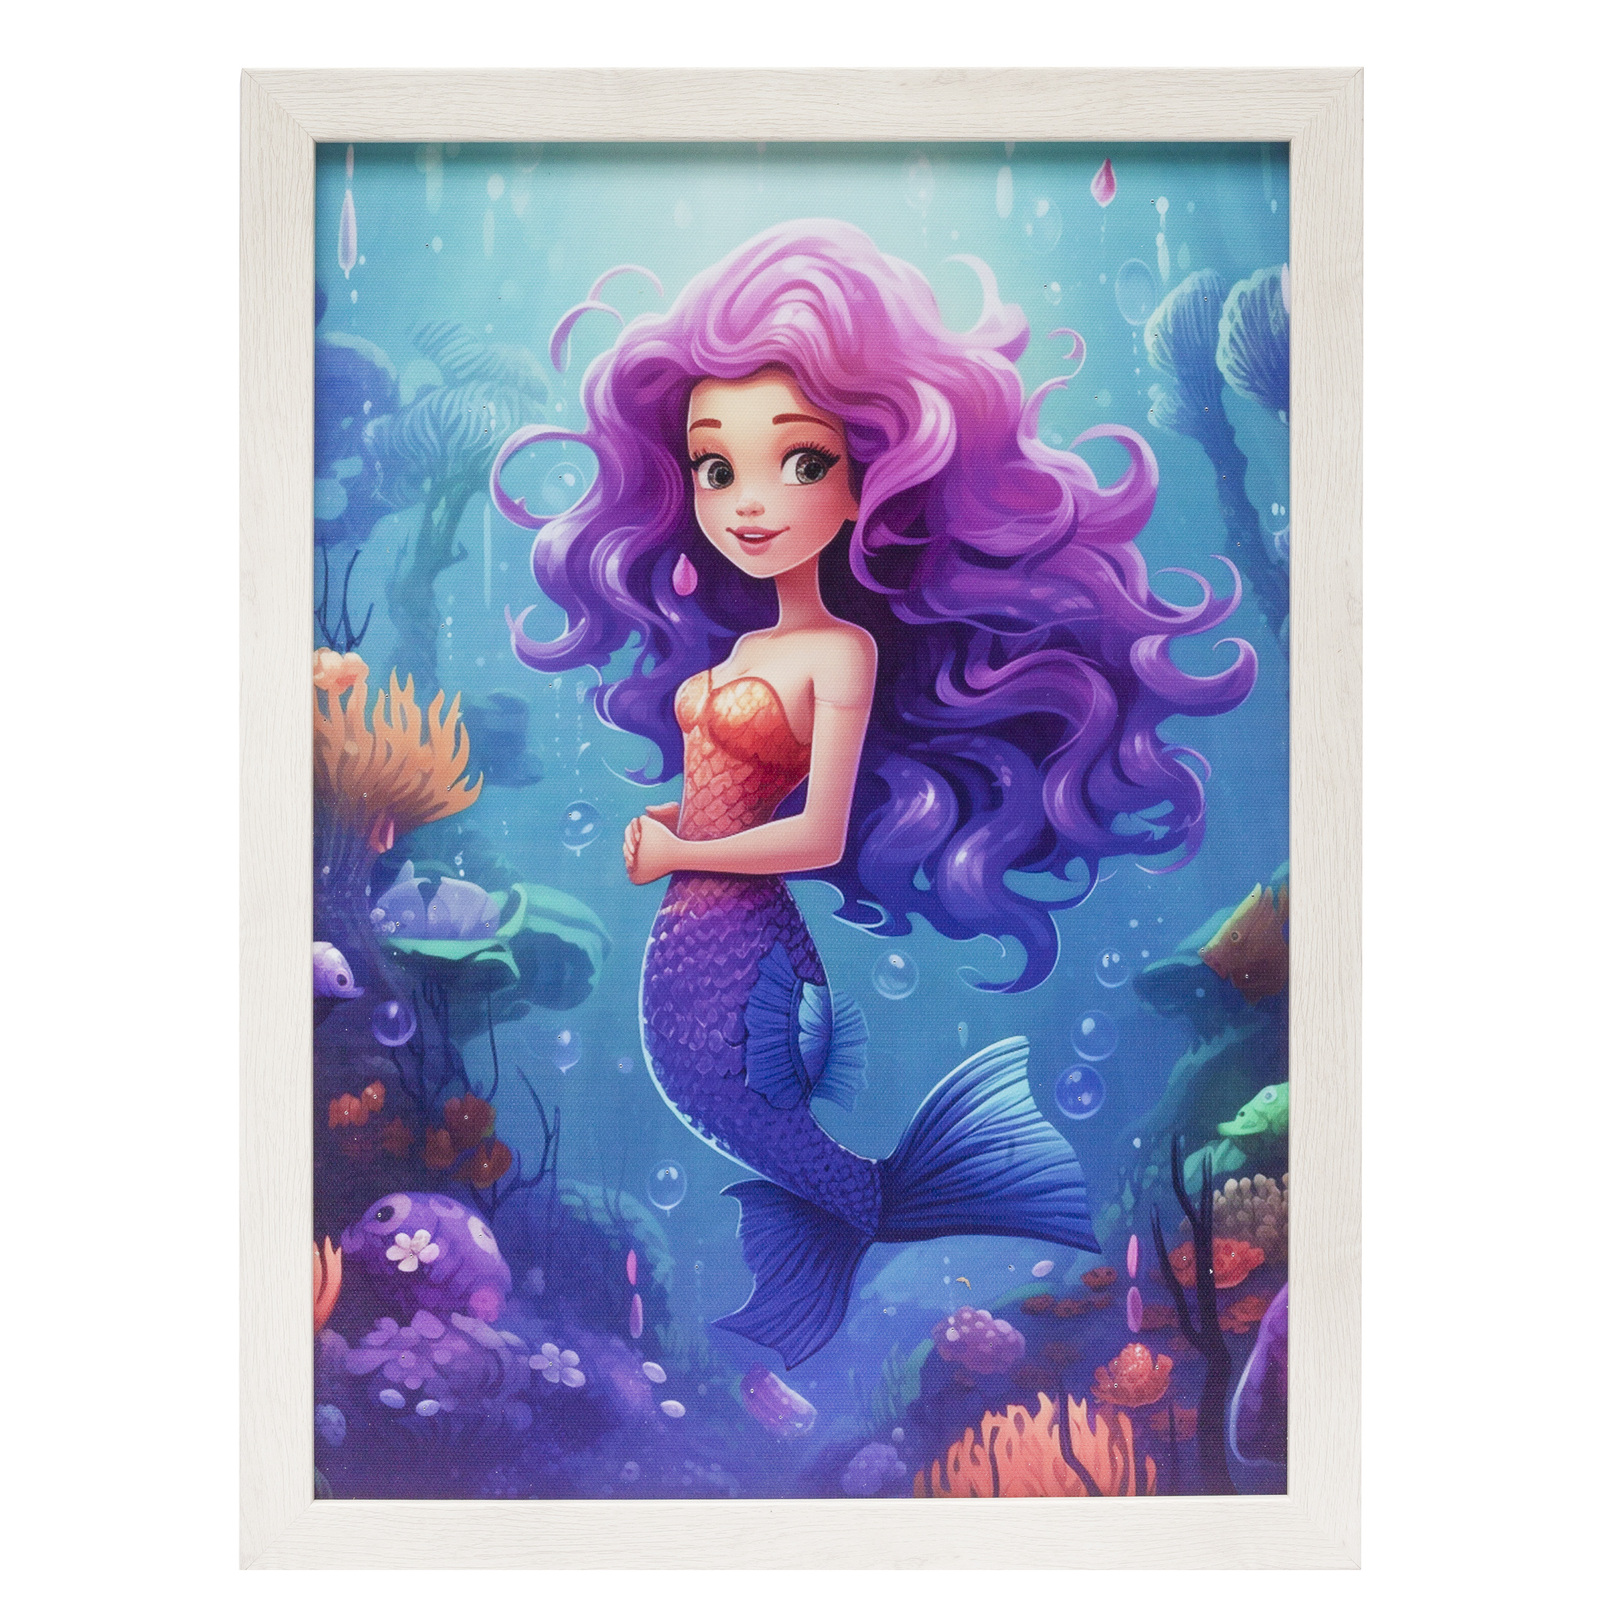 Mad Ally Light Up Frame; Mermaid